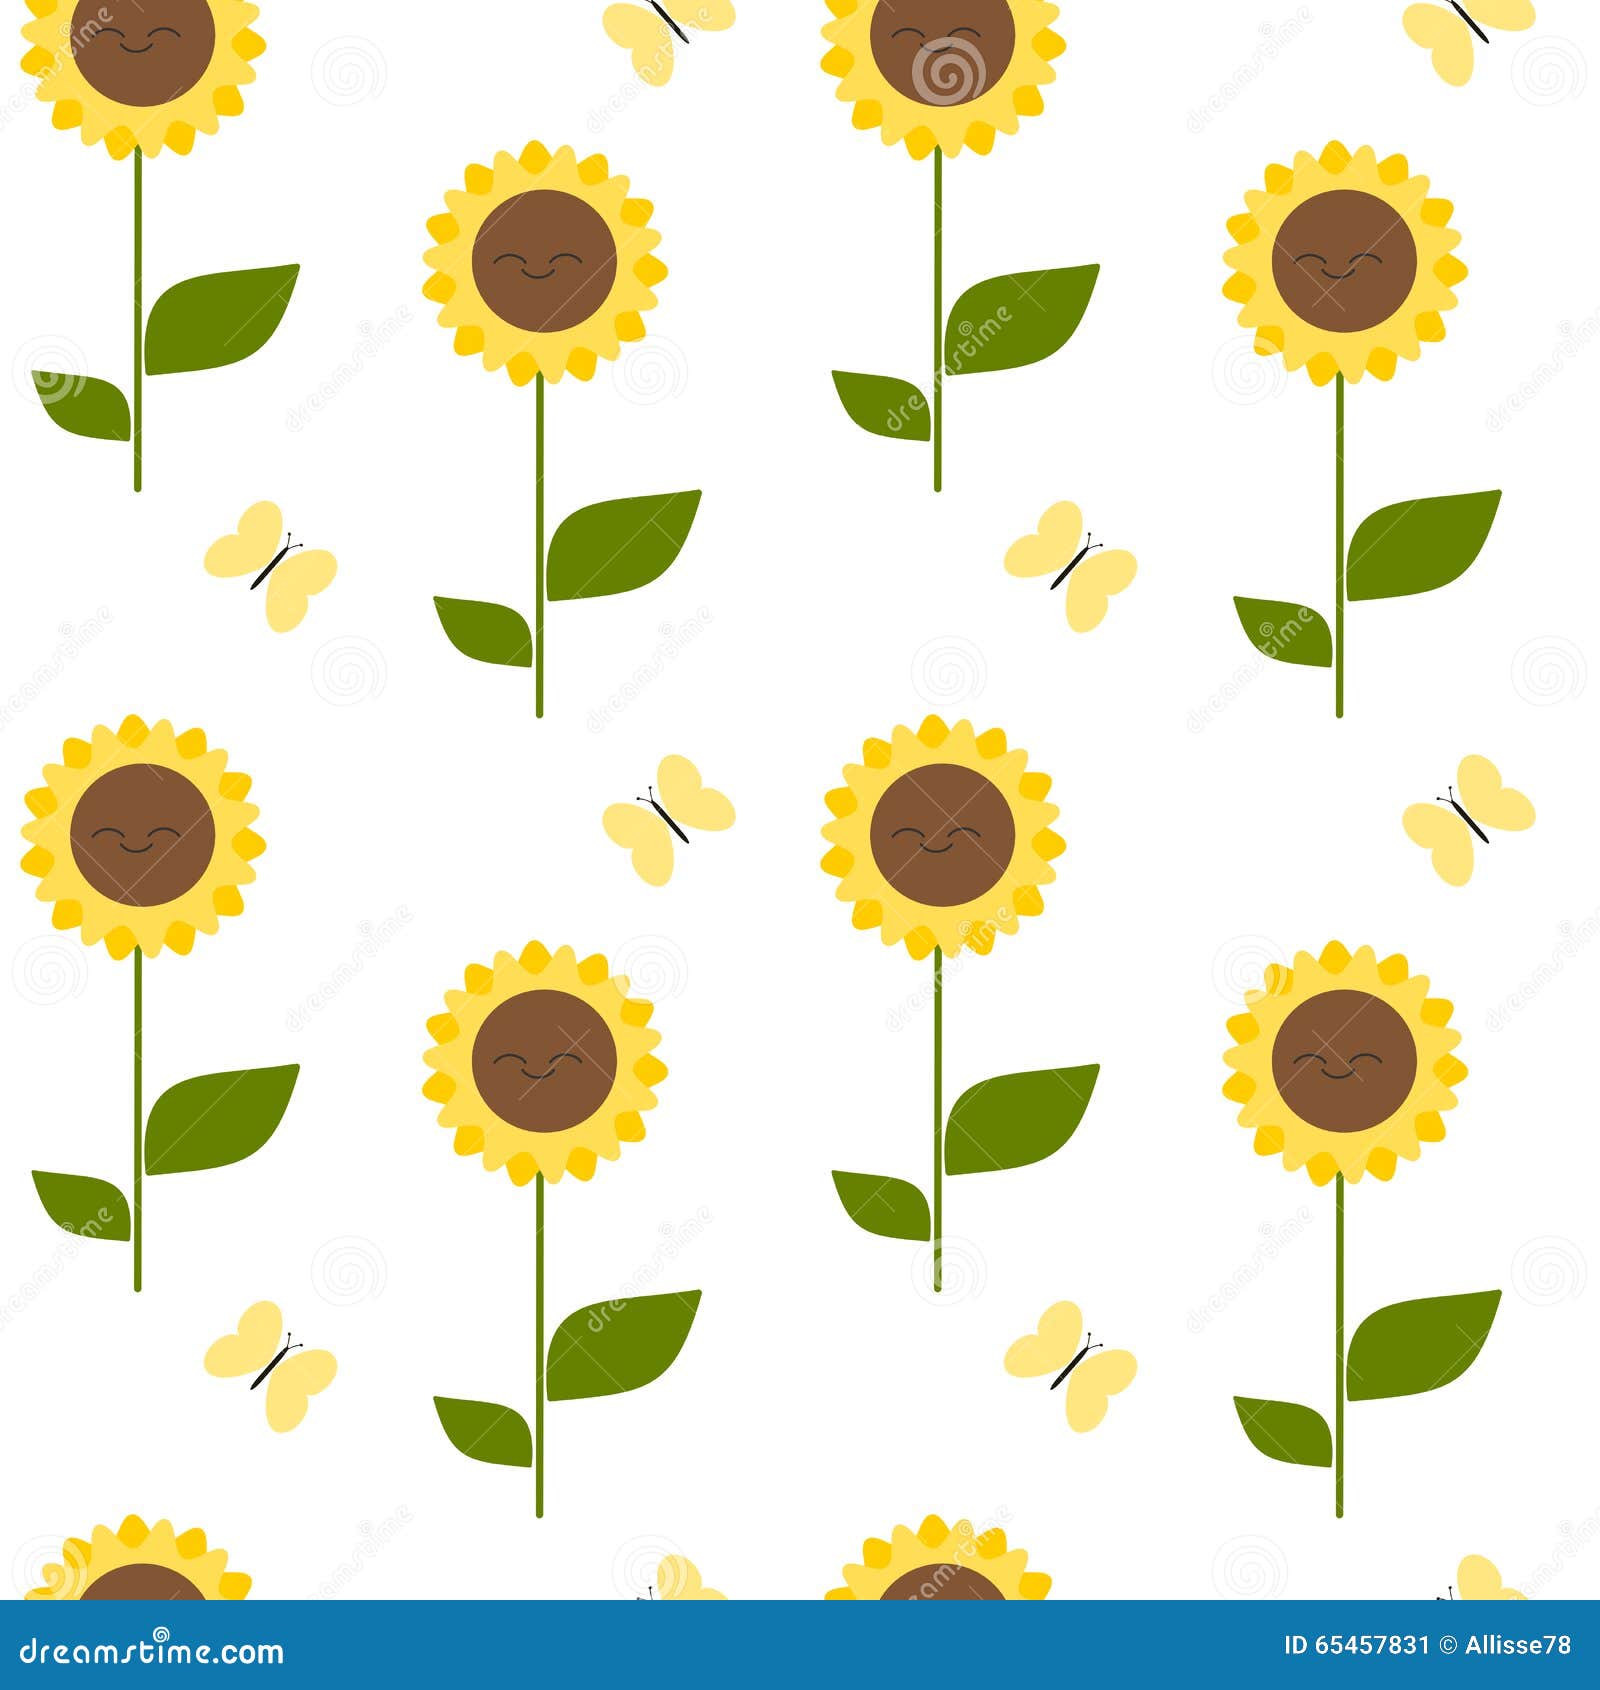 Cute Cartoon Sunflower Seamless Pattern Background Illustration Stock  Vector - Illustration of retro, decorative: 65457831